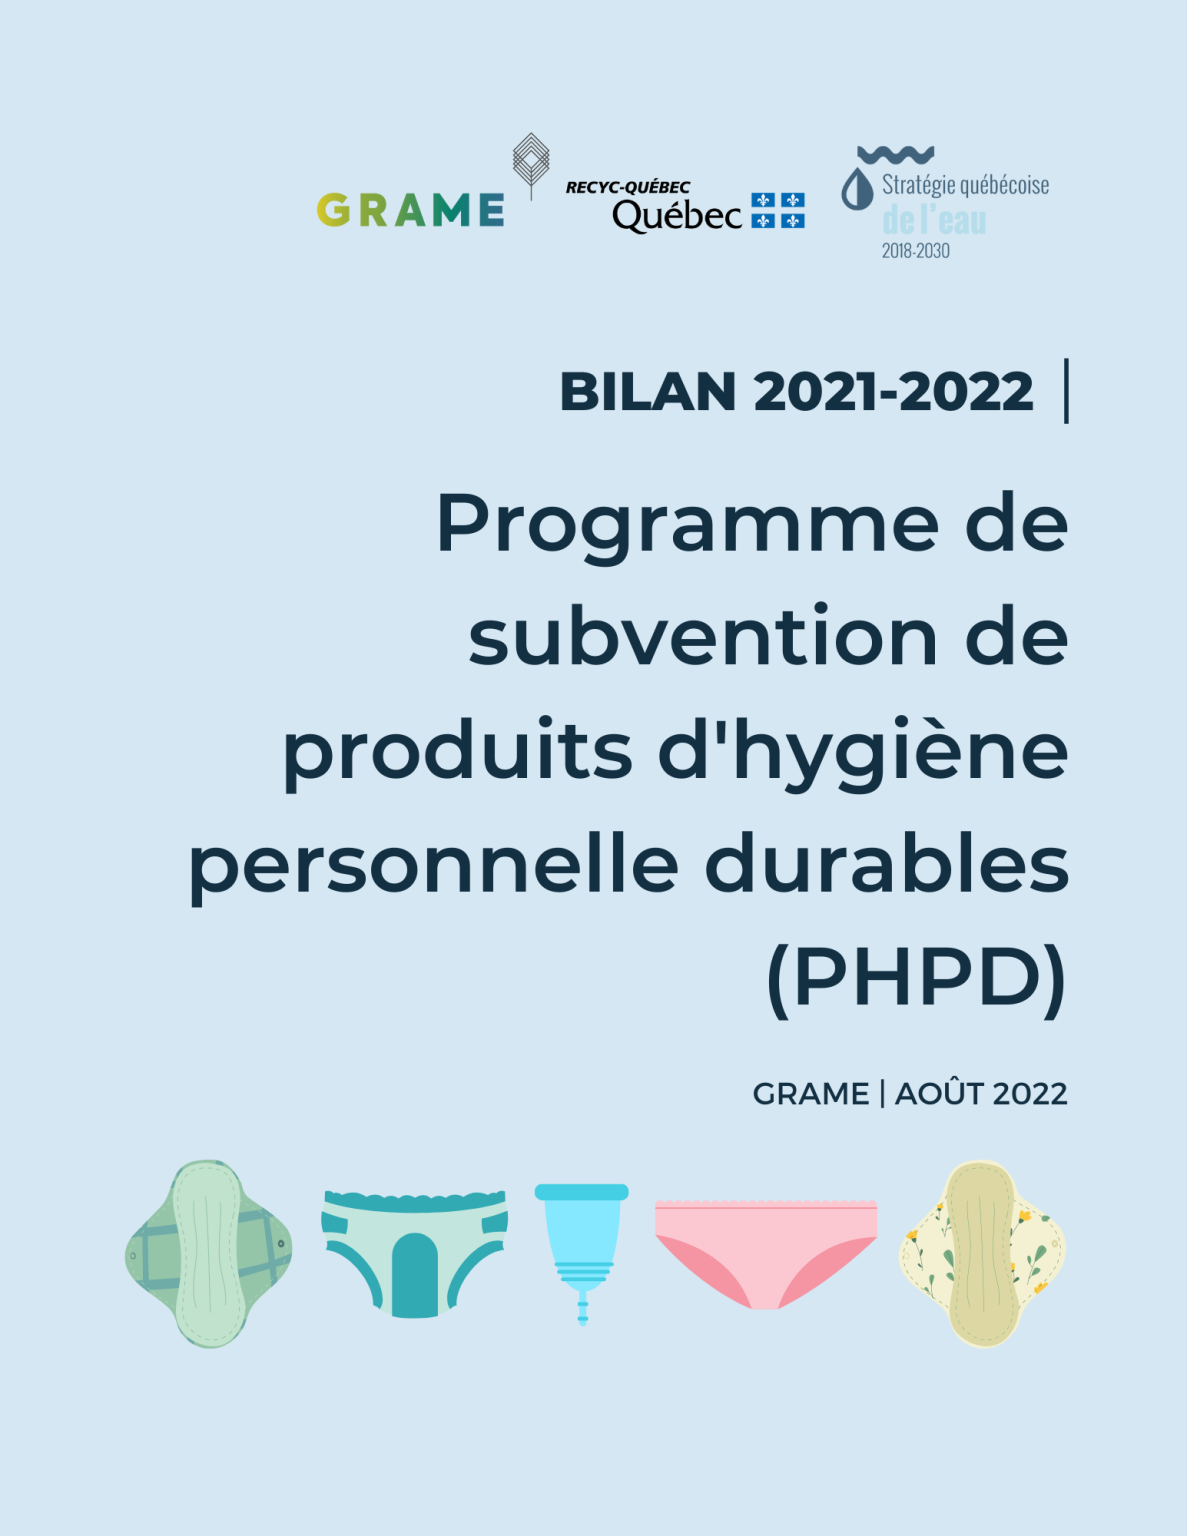 Bilan 2021-2022 - Programme de subvention PHPD